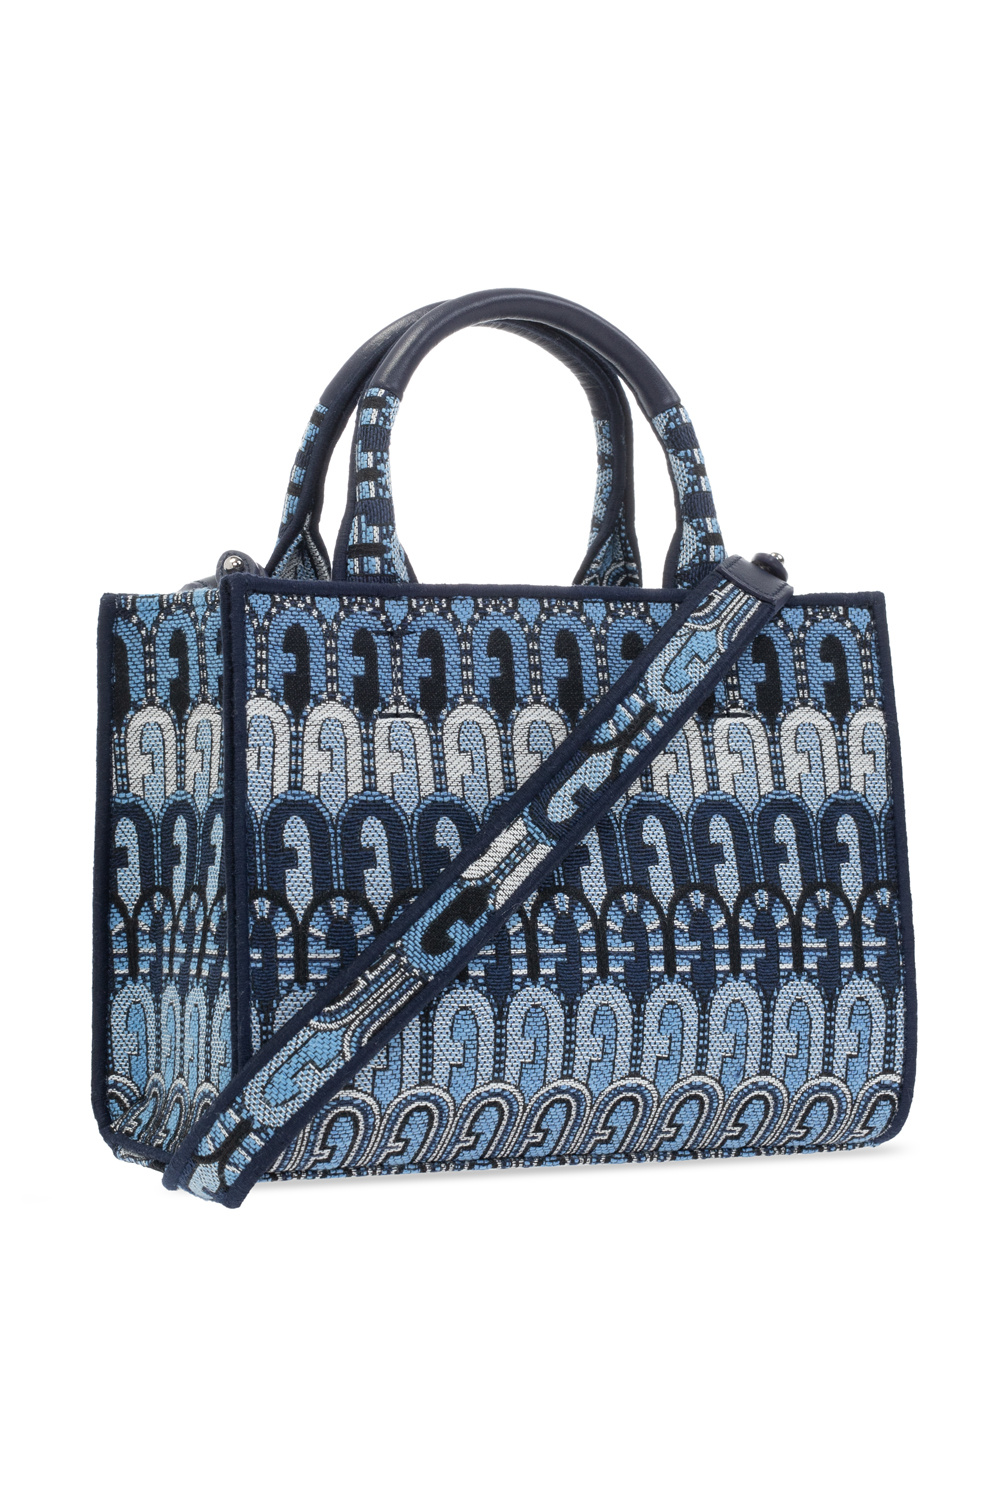 ZAC Zac Posen womens Belay Bucket Bag, Navy, One Size US: Handbags